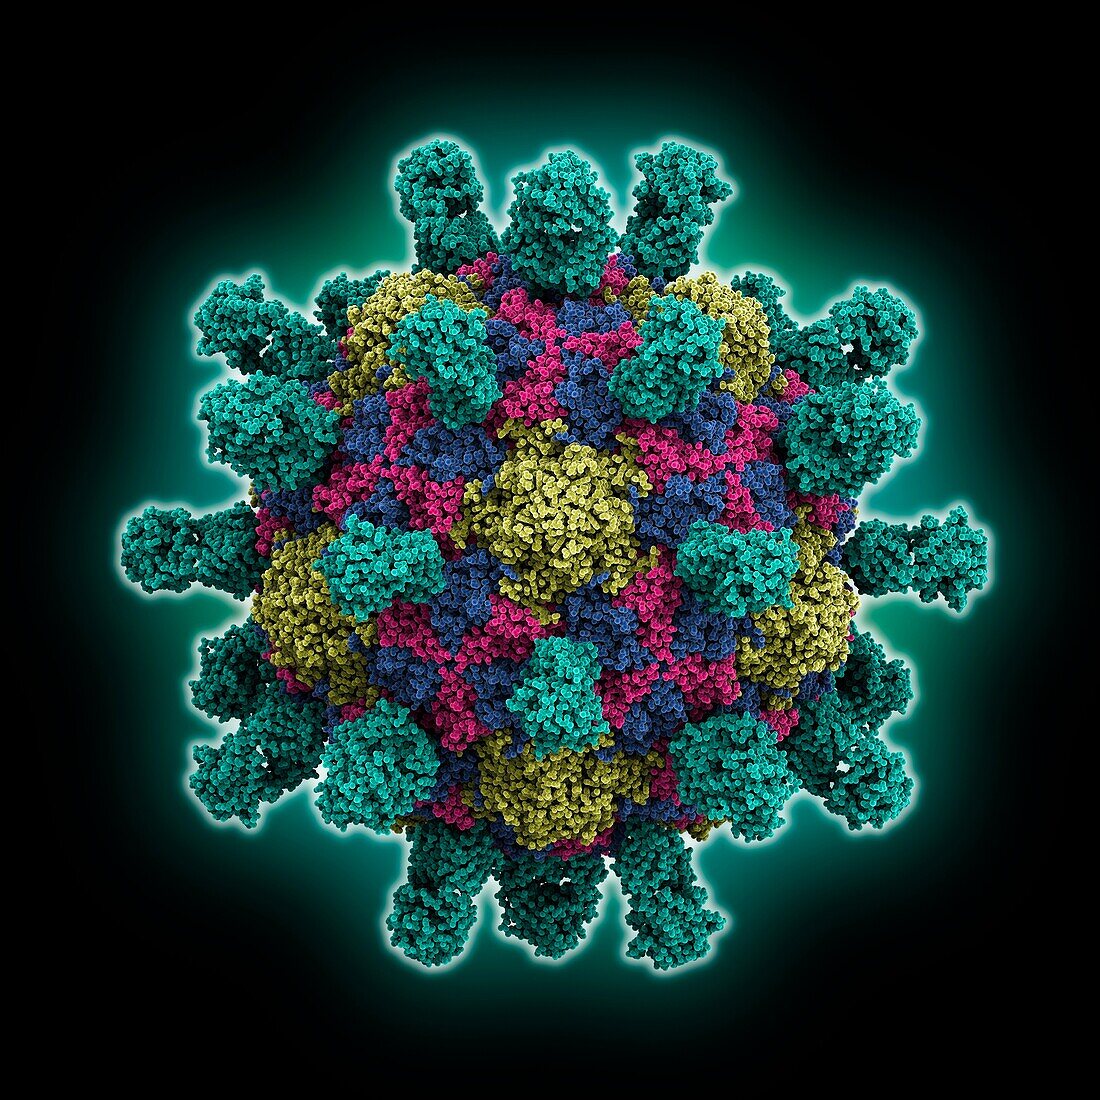 Poliovirus Type 1 Mahoney capsid, molecular model